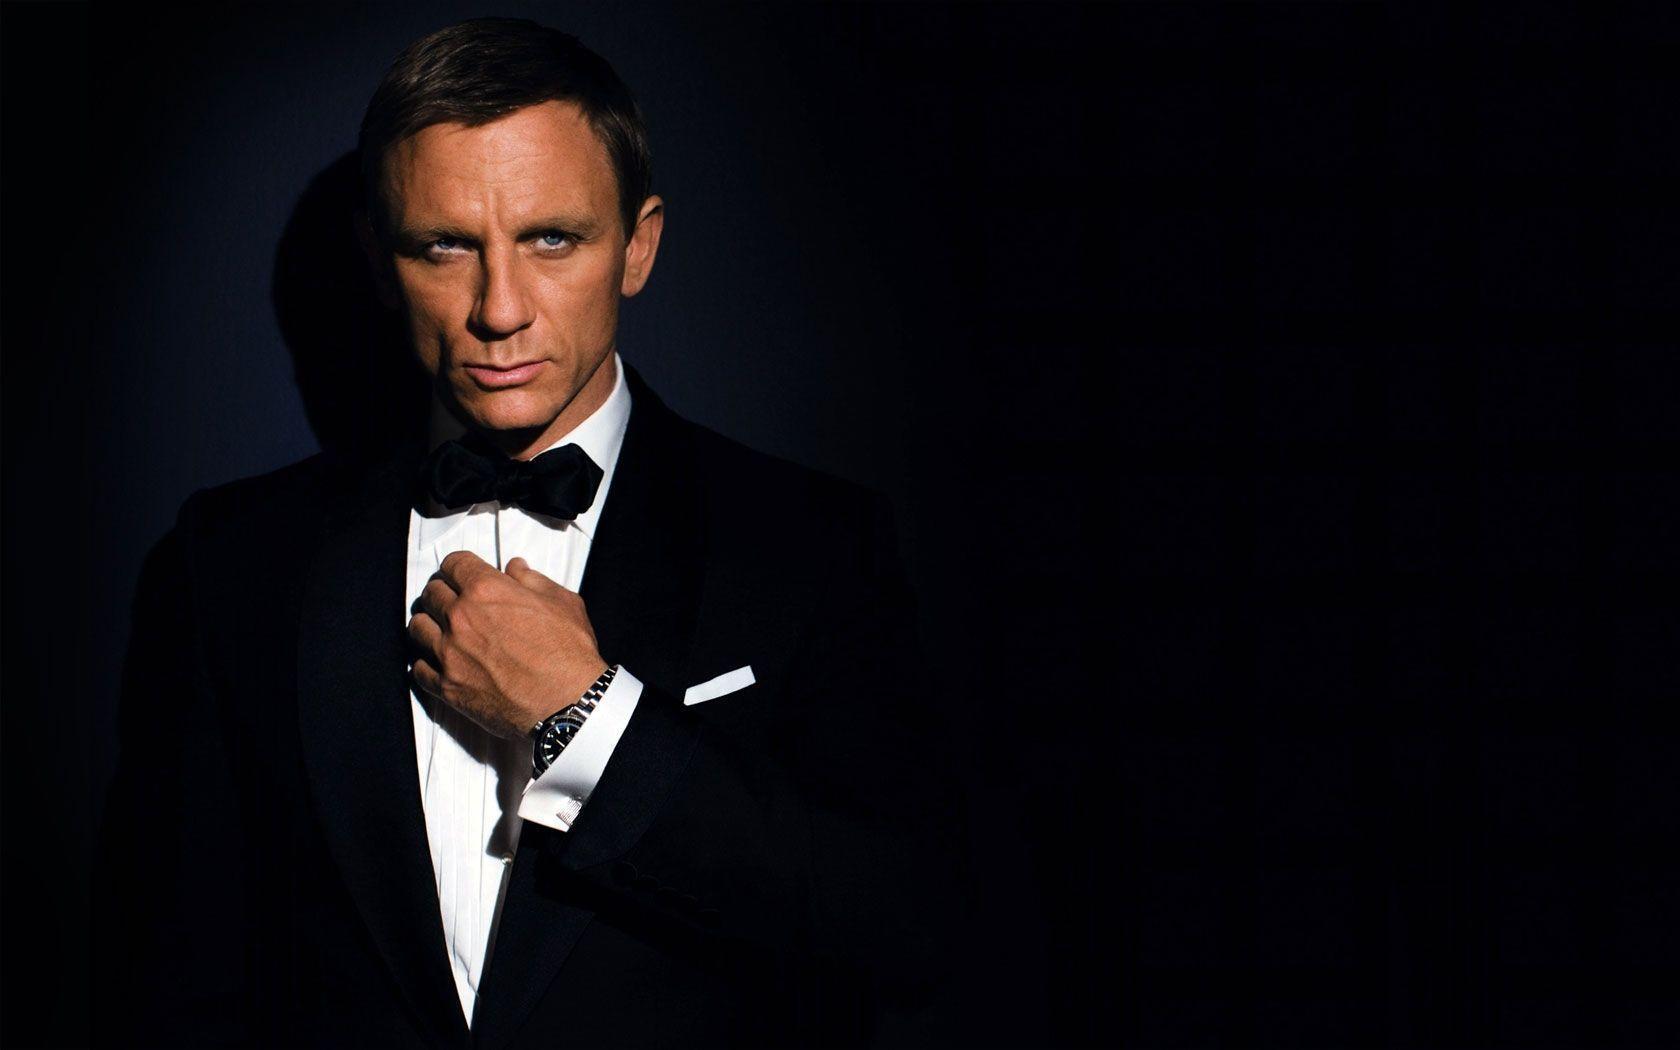 Daniel Craig 007 Wallpaper Image & Picture